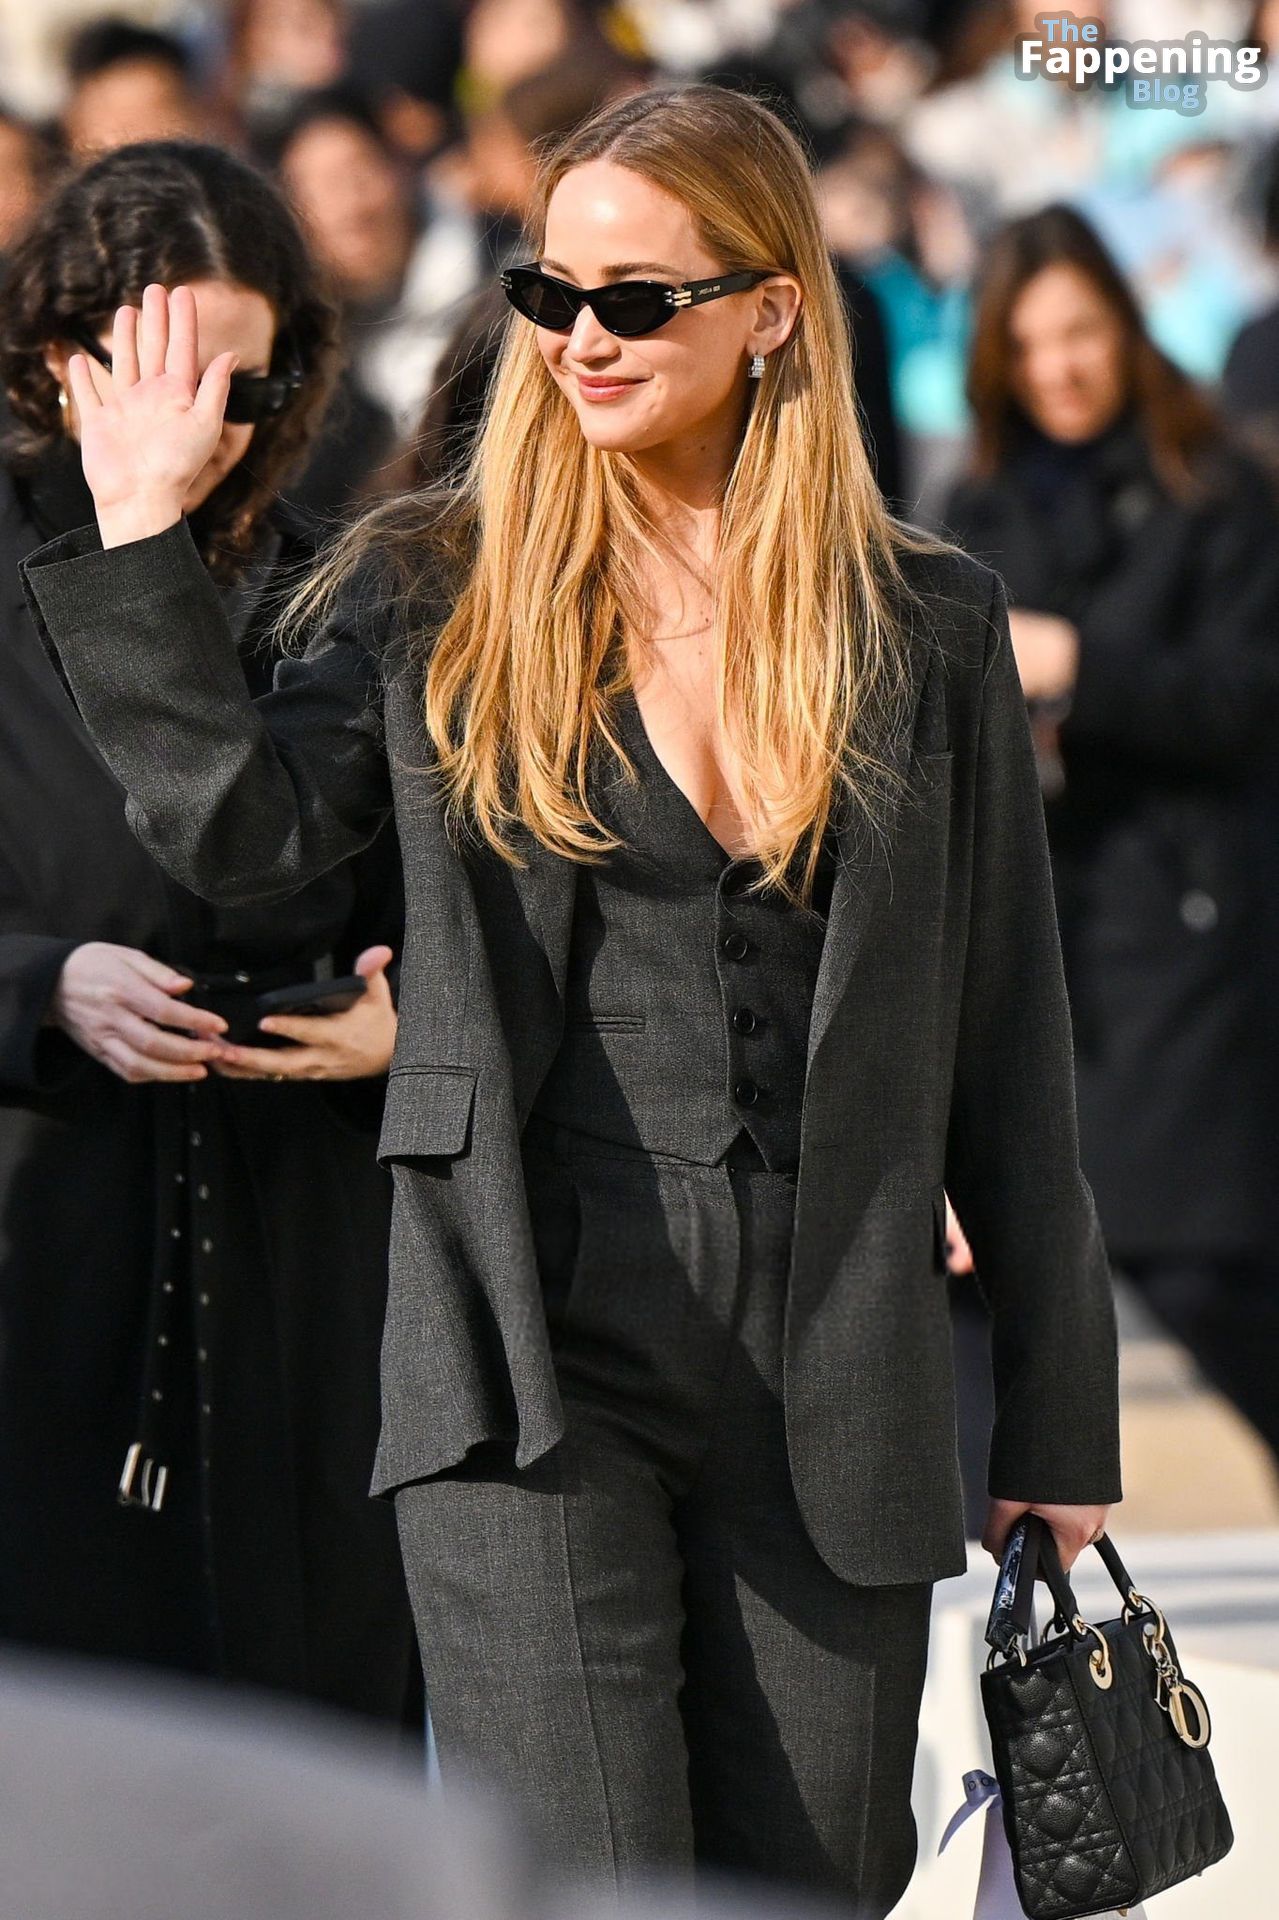 Dior-Fashion-Show-Jennifer-Lawrence-Boobs-Cleavage-25-thefappeningblog.com_.jpg